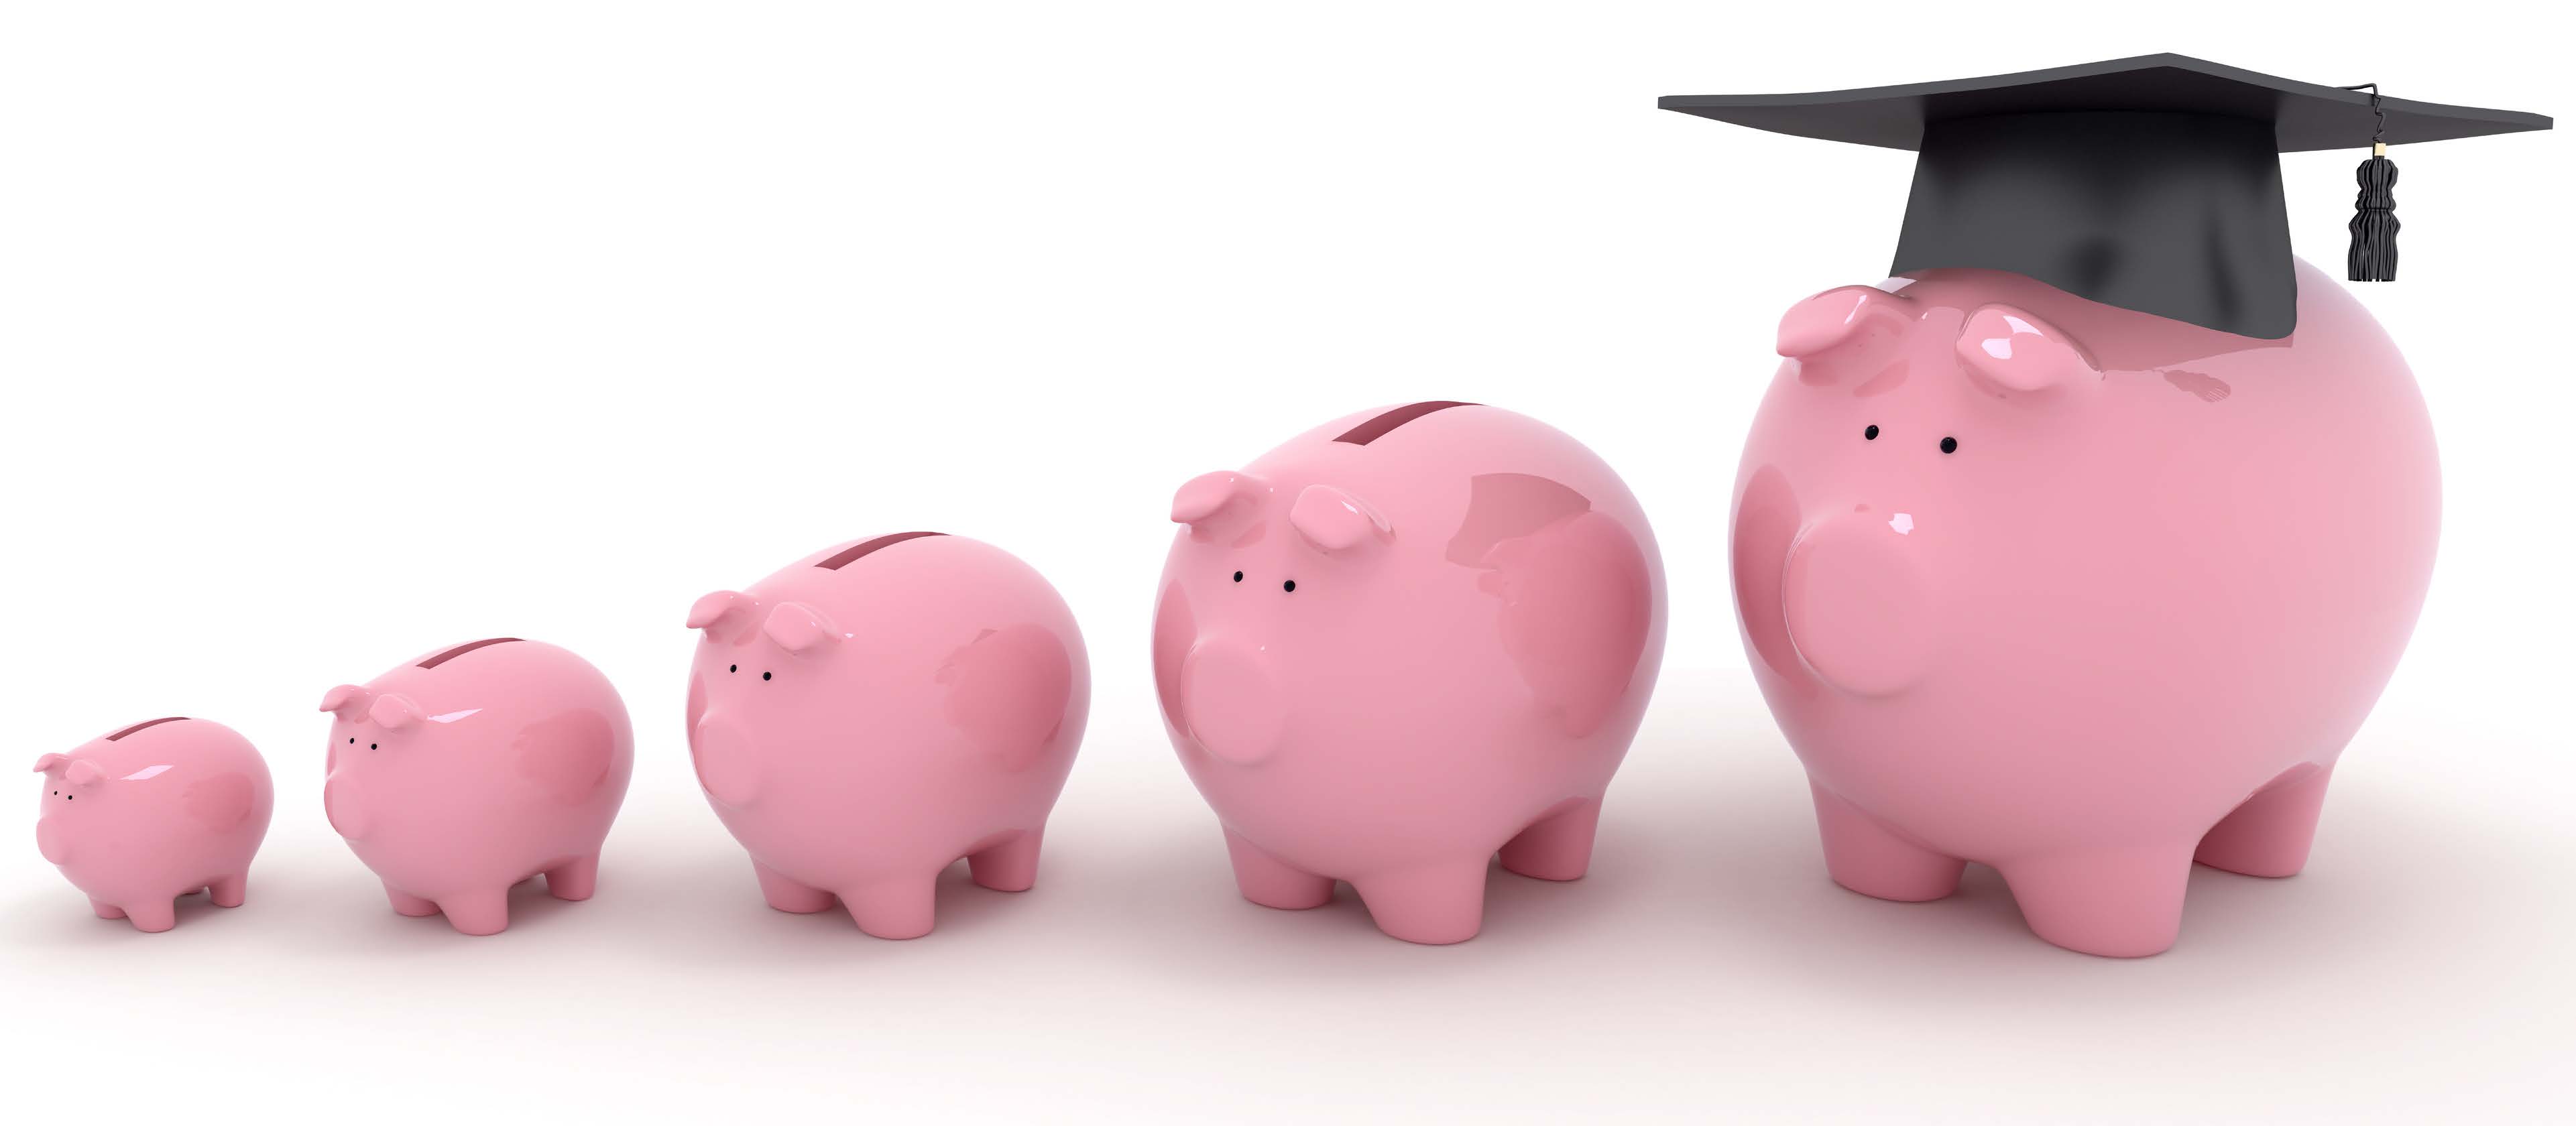 Five piggy banks in descending size order with biggest wearing graduation cap